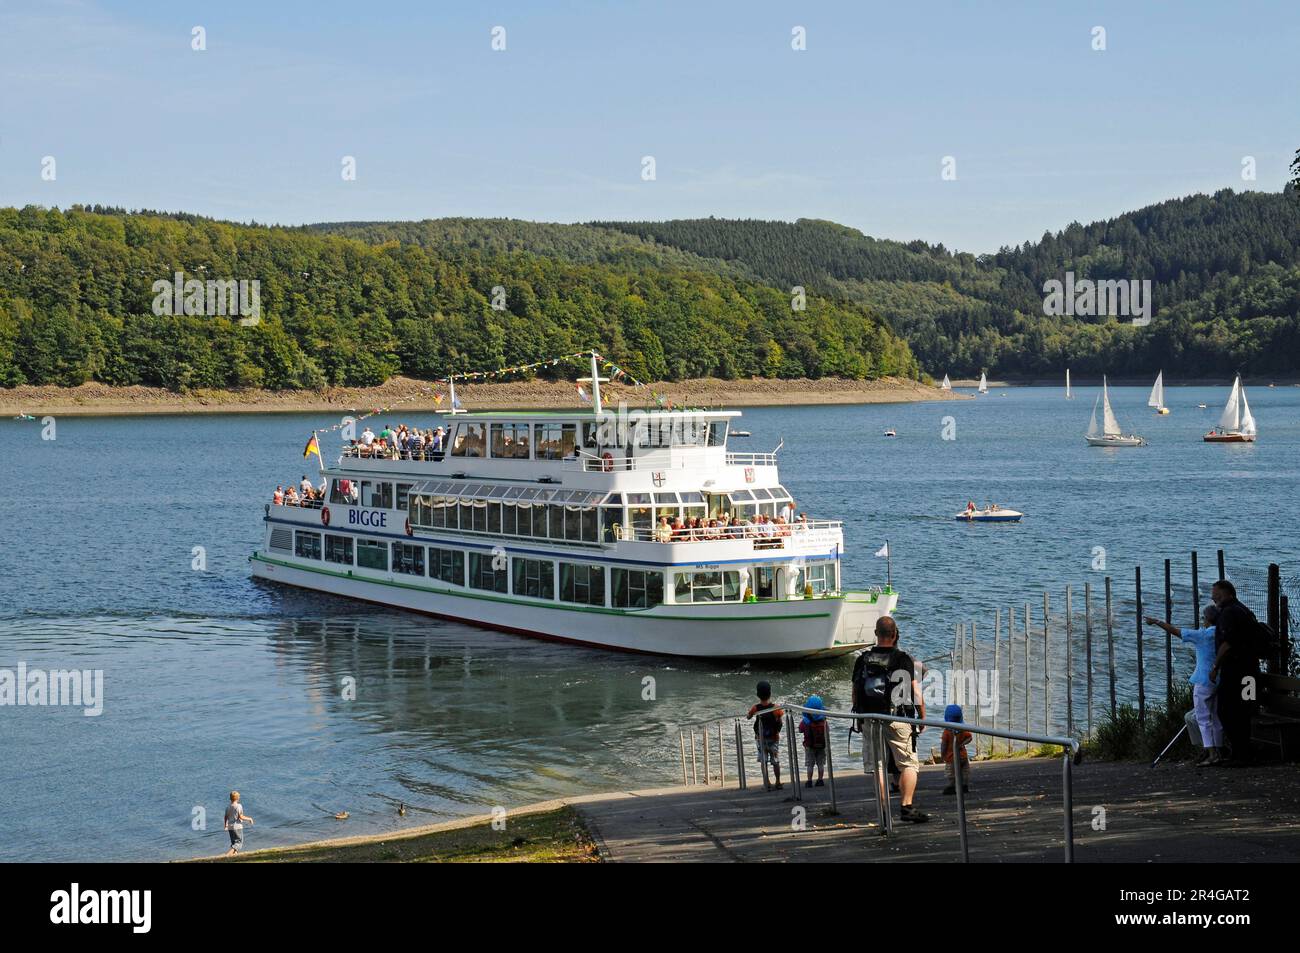 Excursion boat, lake, jetty, pier, passenger ship, Sondern, Biggetalsperre, Olpe, Ebbegebirge nature Park, Sauerland, North Rhine-Westphalia, Germany Stock Photo